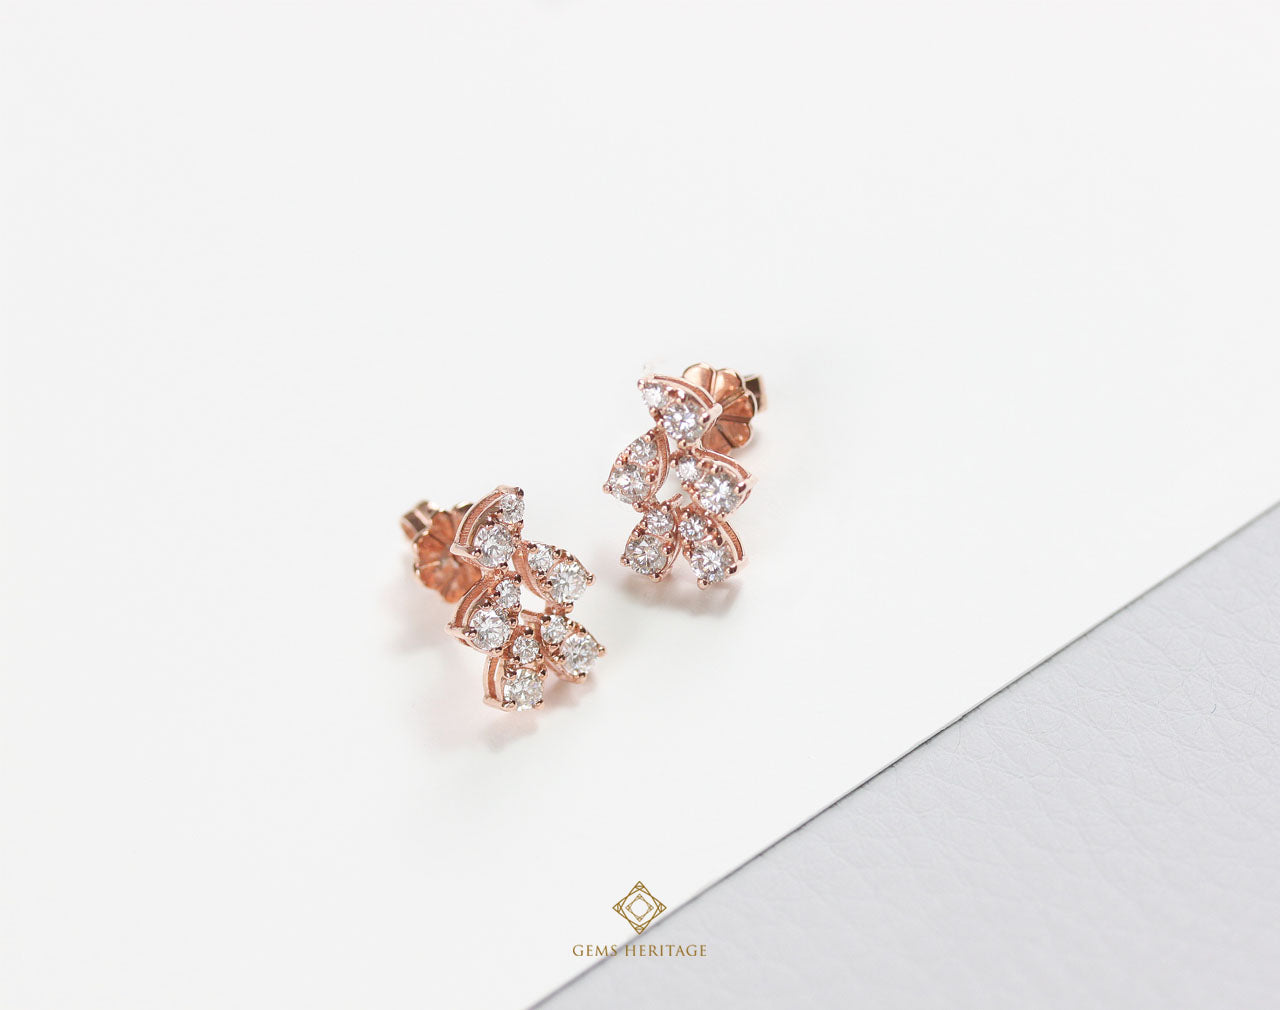 Pears diamond earrings